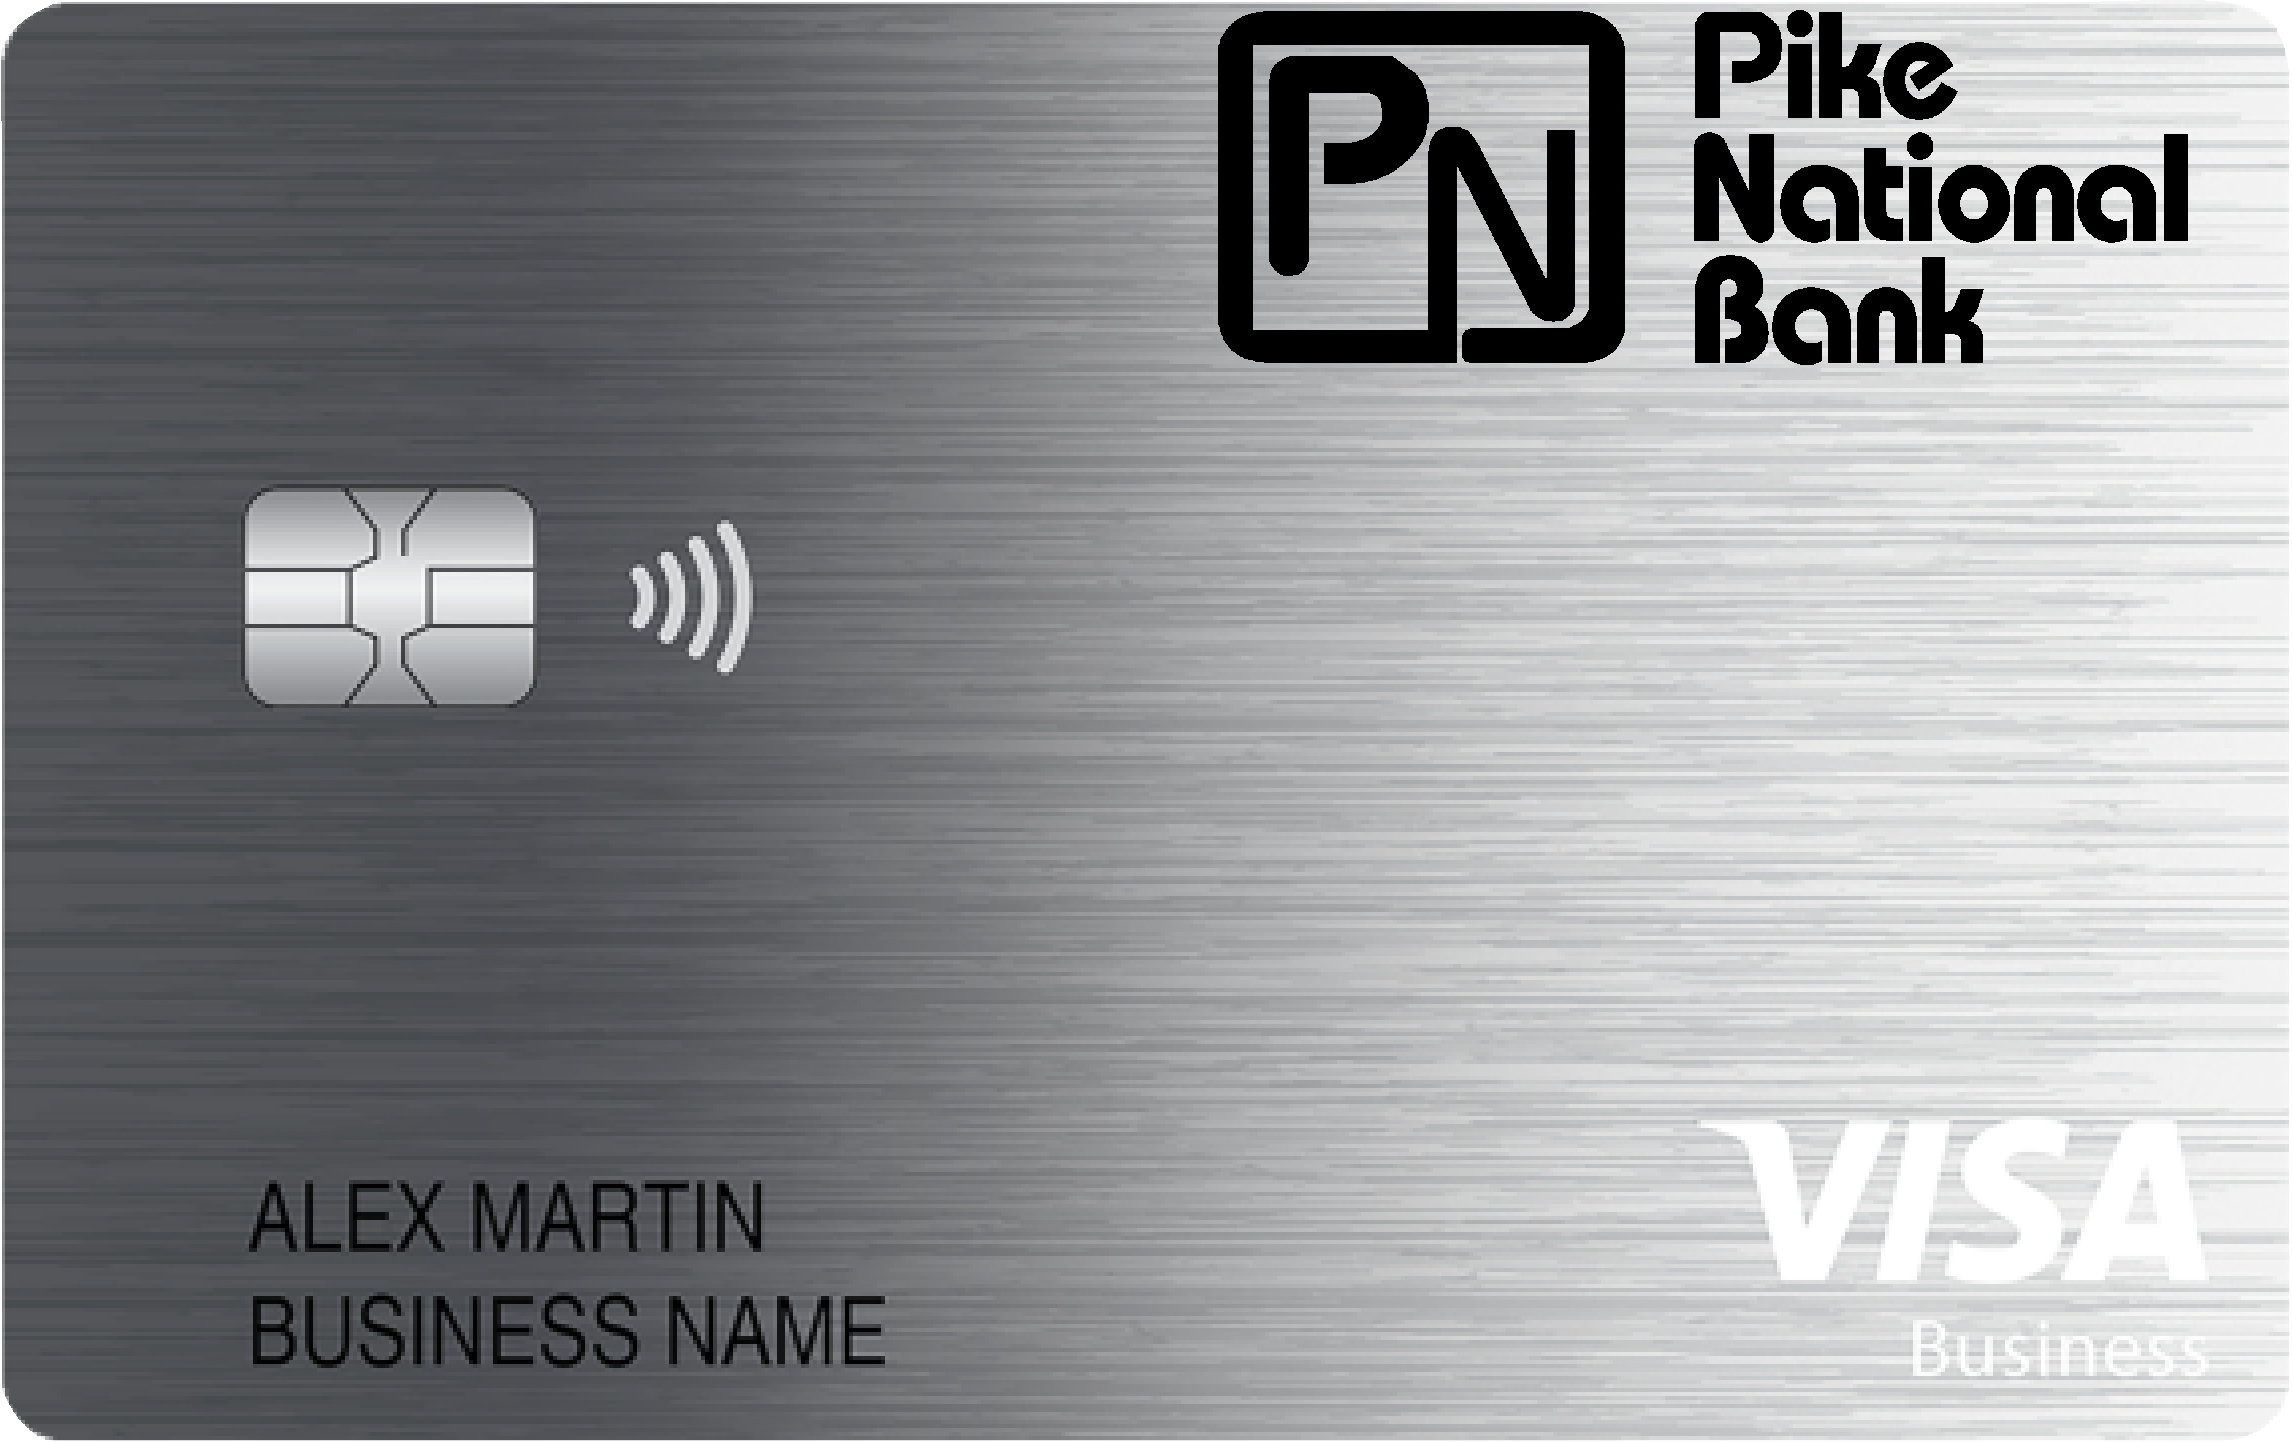 Pike National Bank Business Real Rewards Card